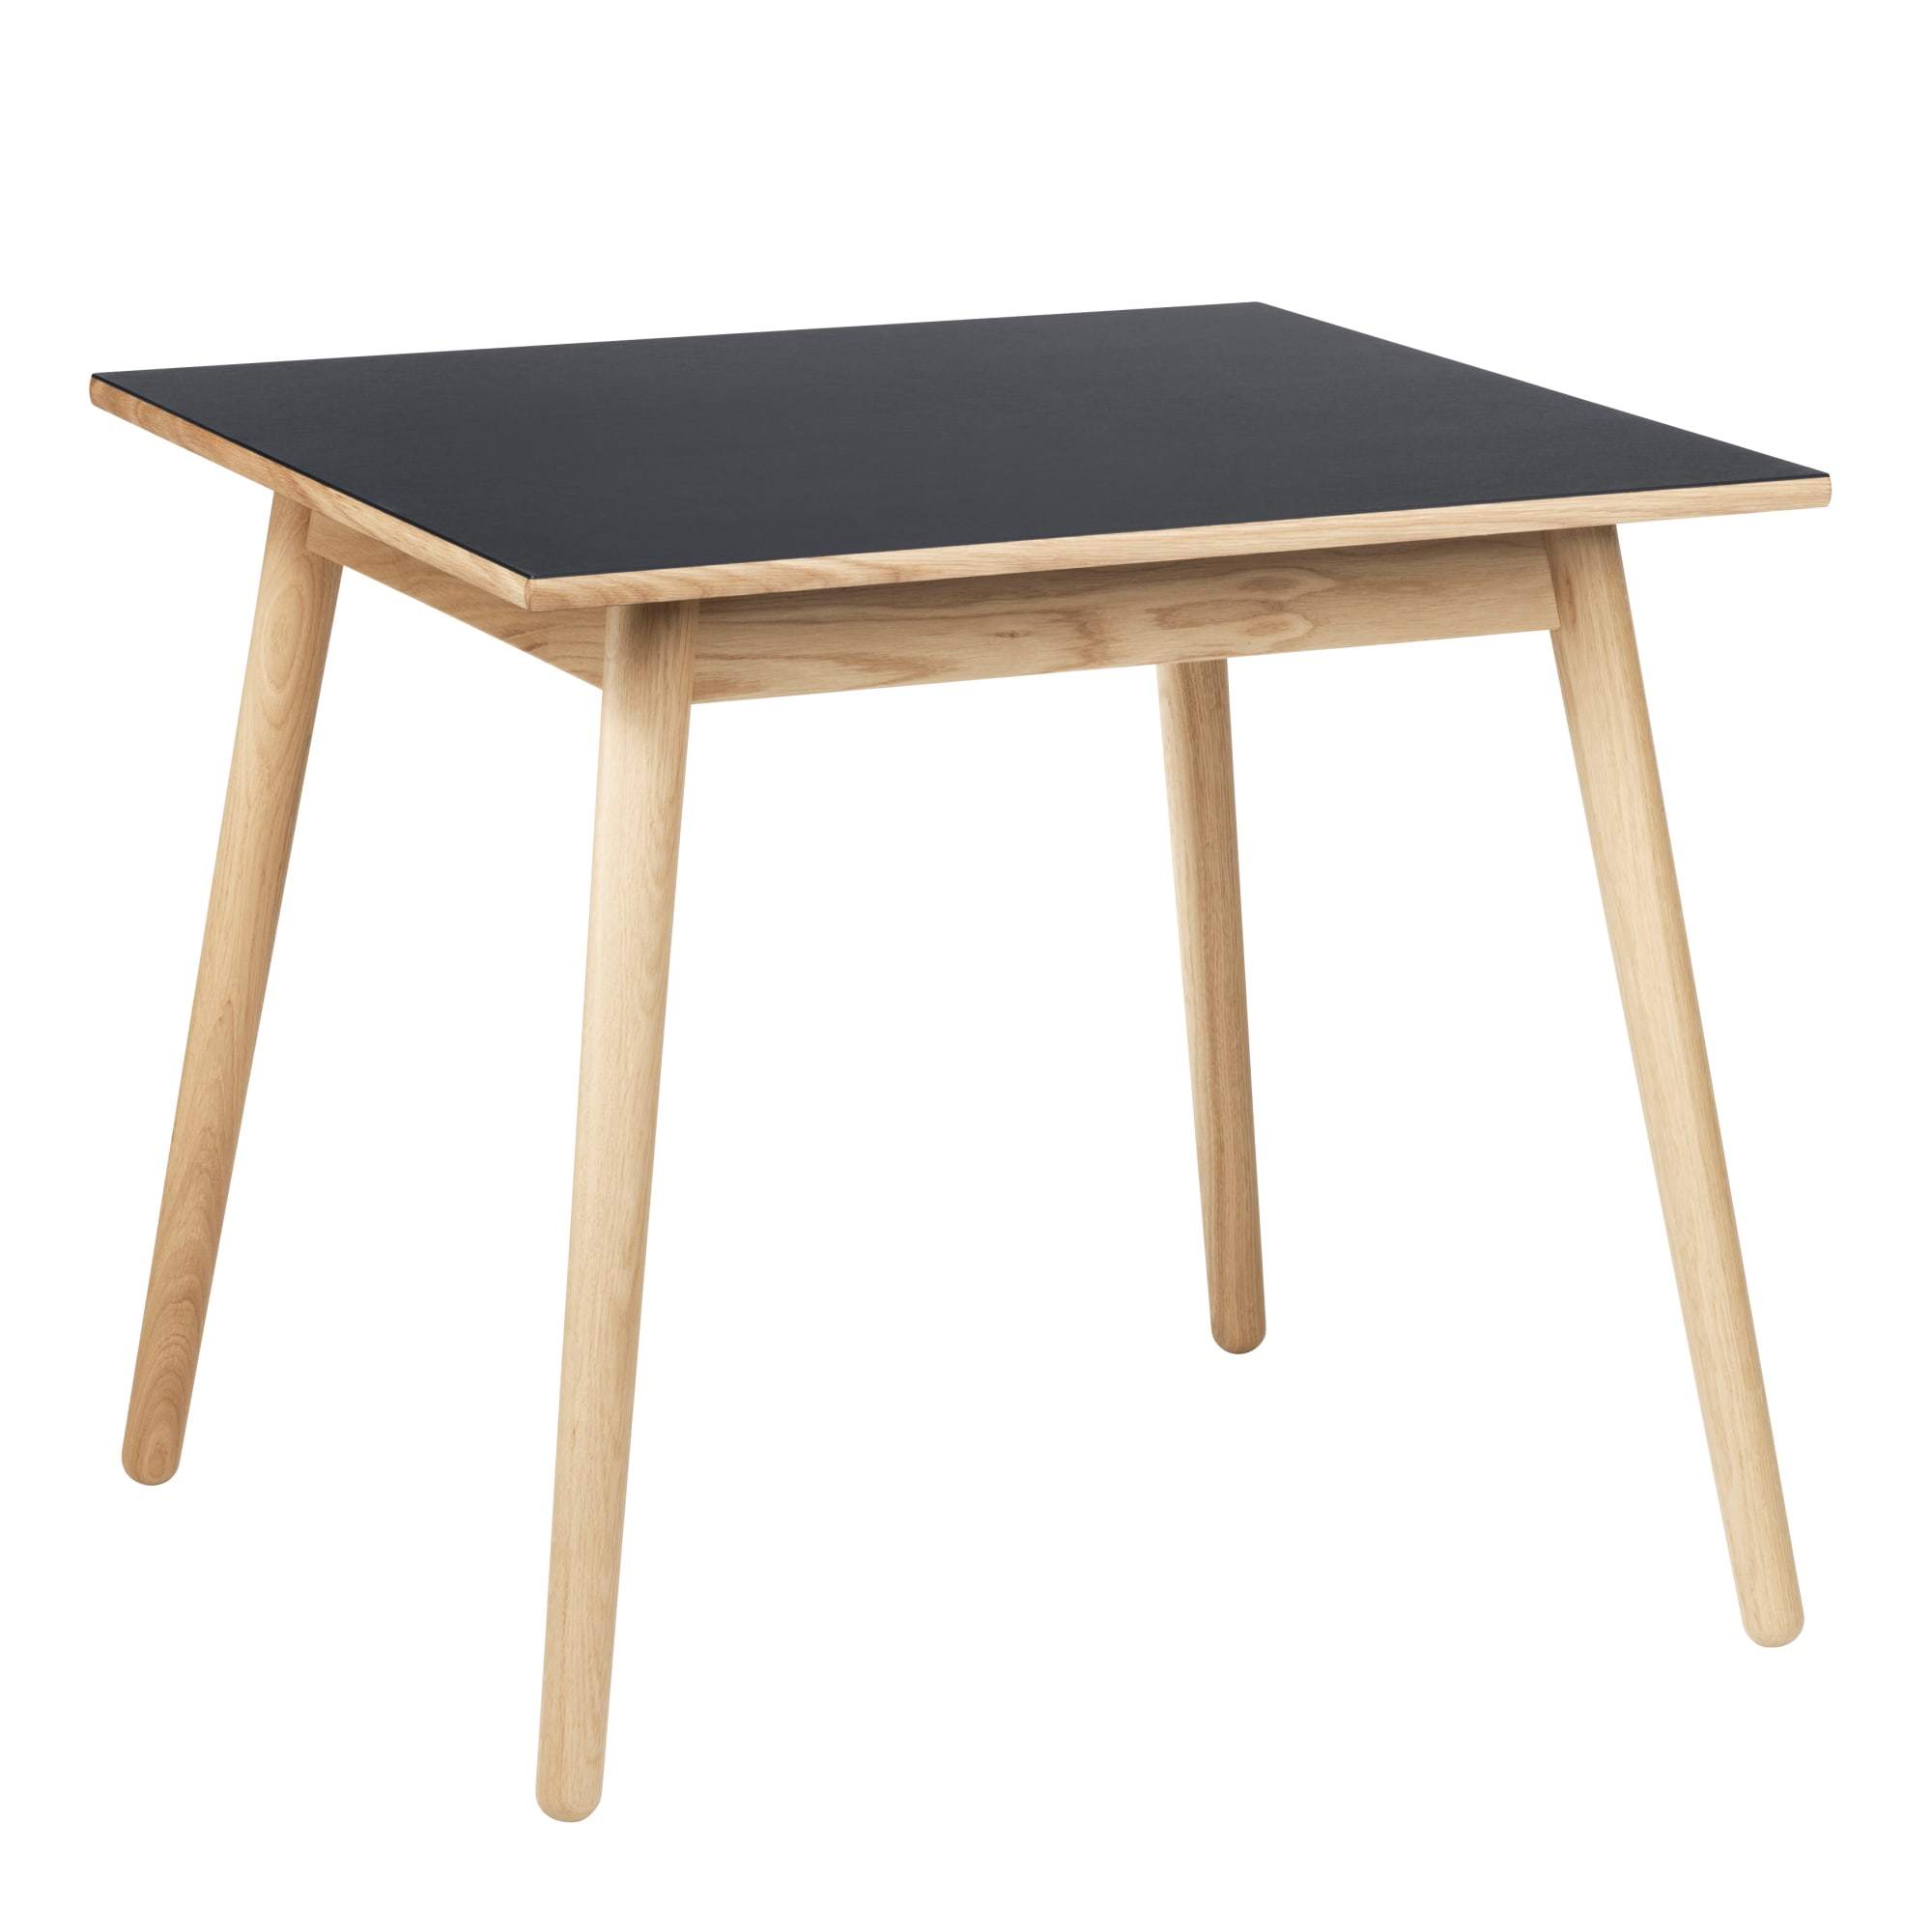 Fdb Møbler C35 Dining Table Oak, Dark Grey Linoleum Tabletop, 82x82cm